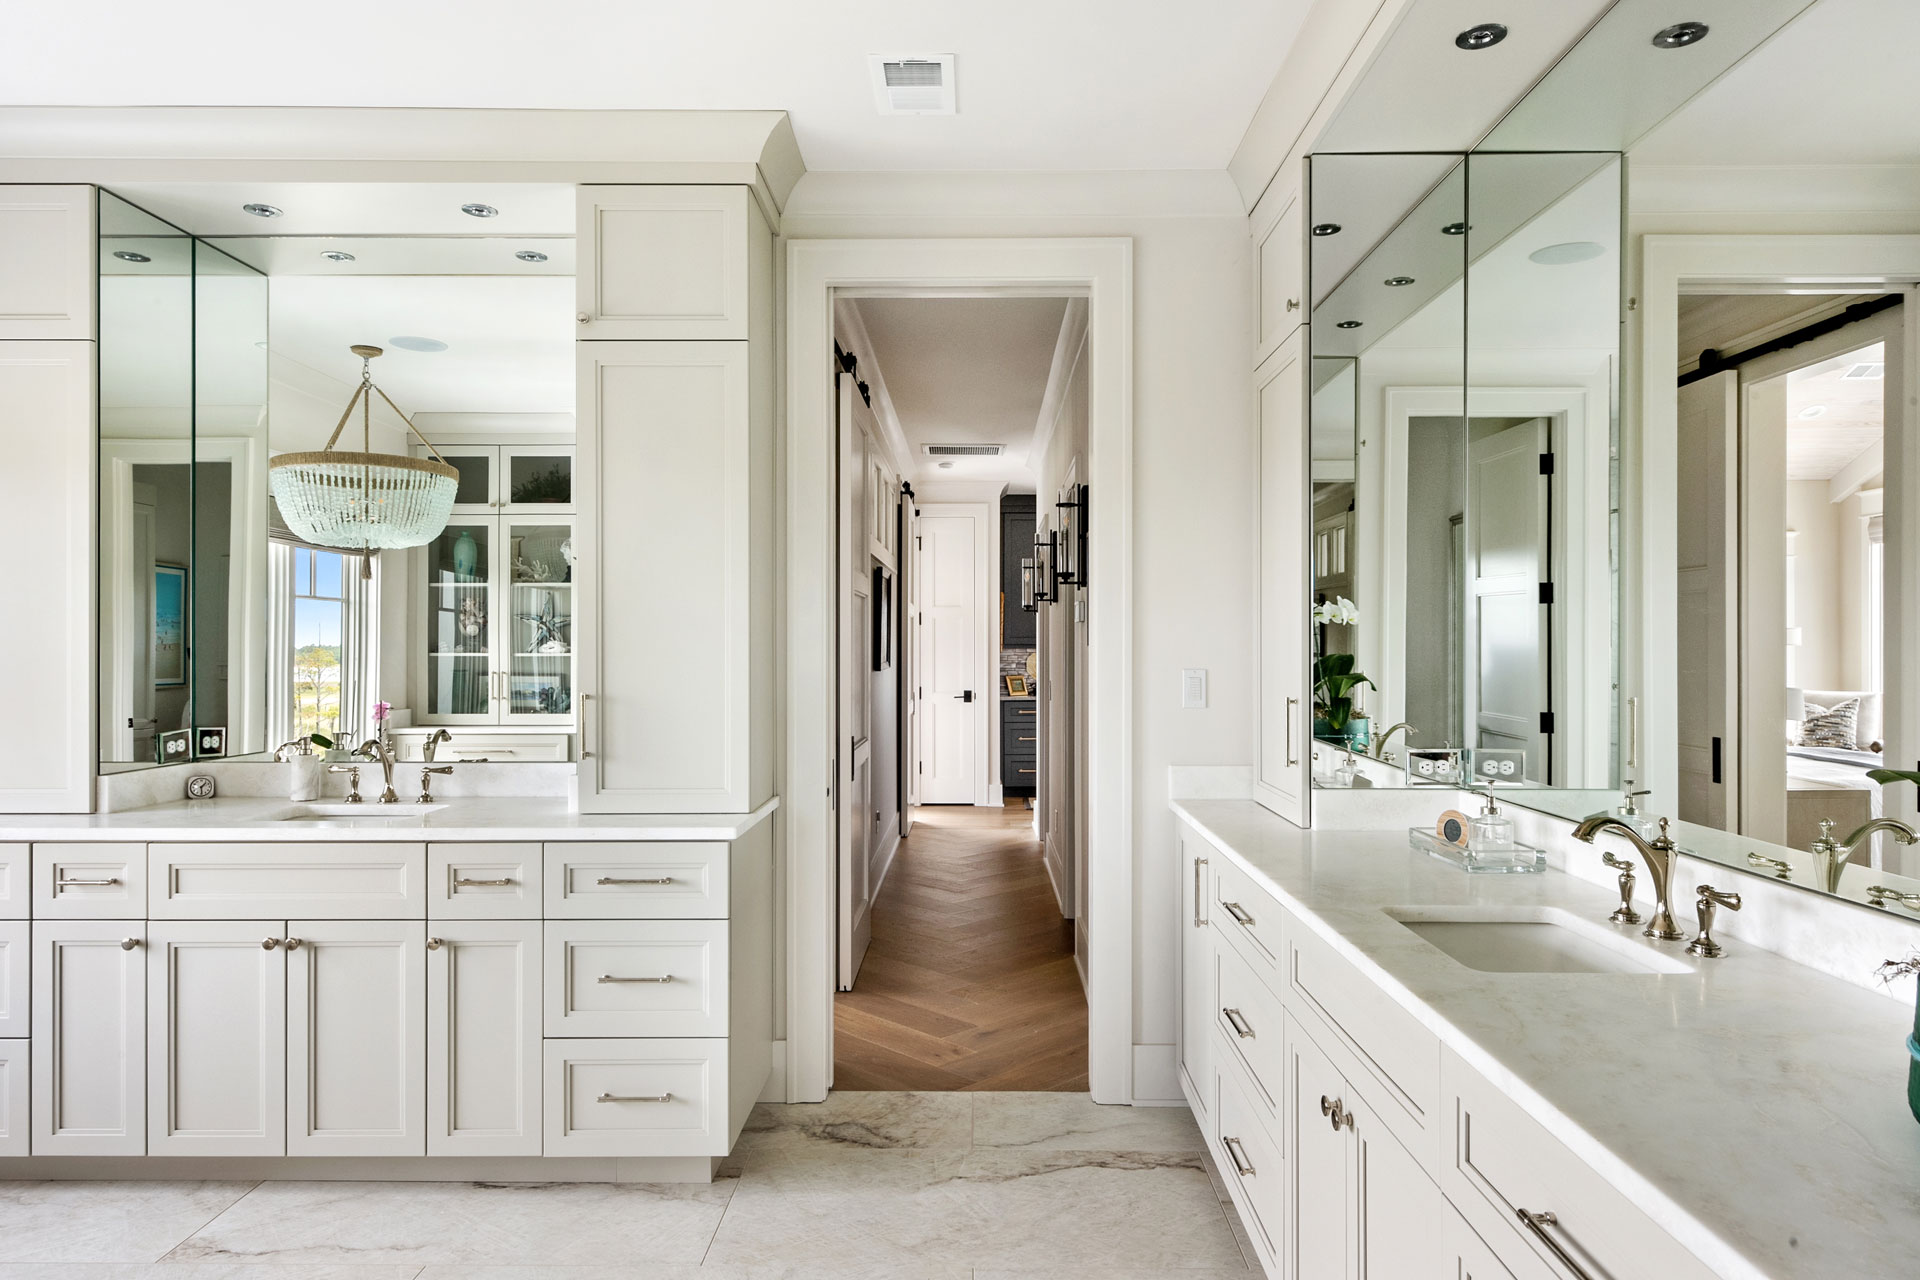 Large bathroom suite with separate vanities, marble, and hallway to closets with wide herringbone wood floor